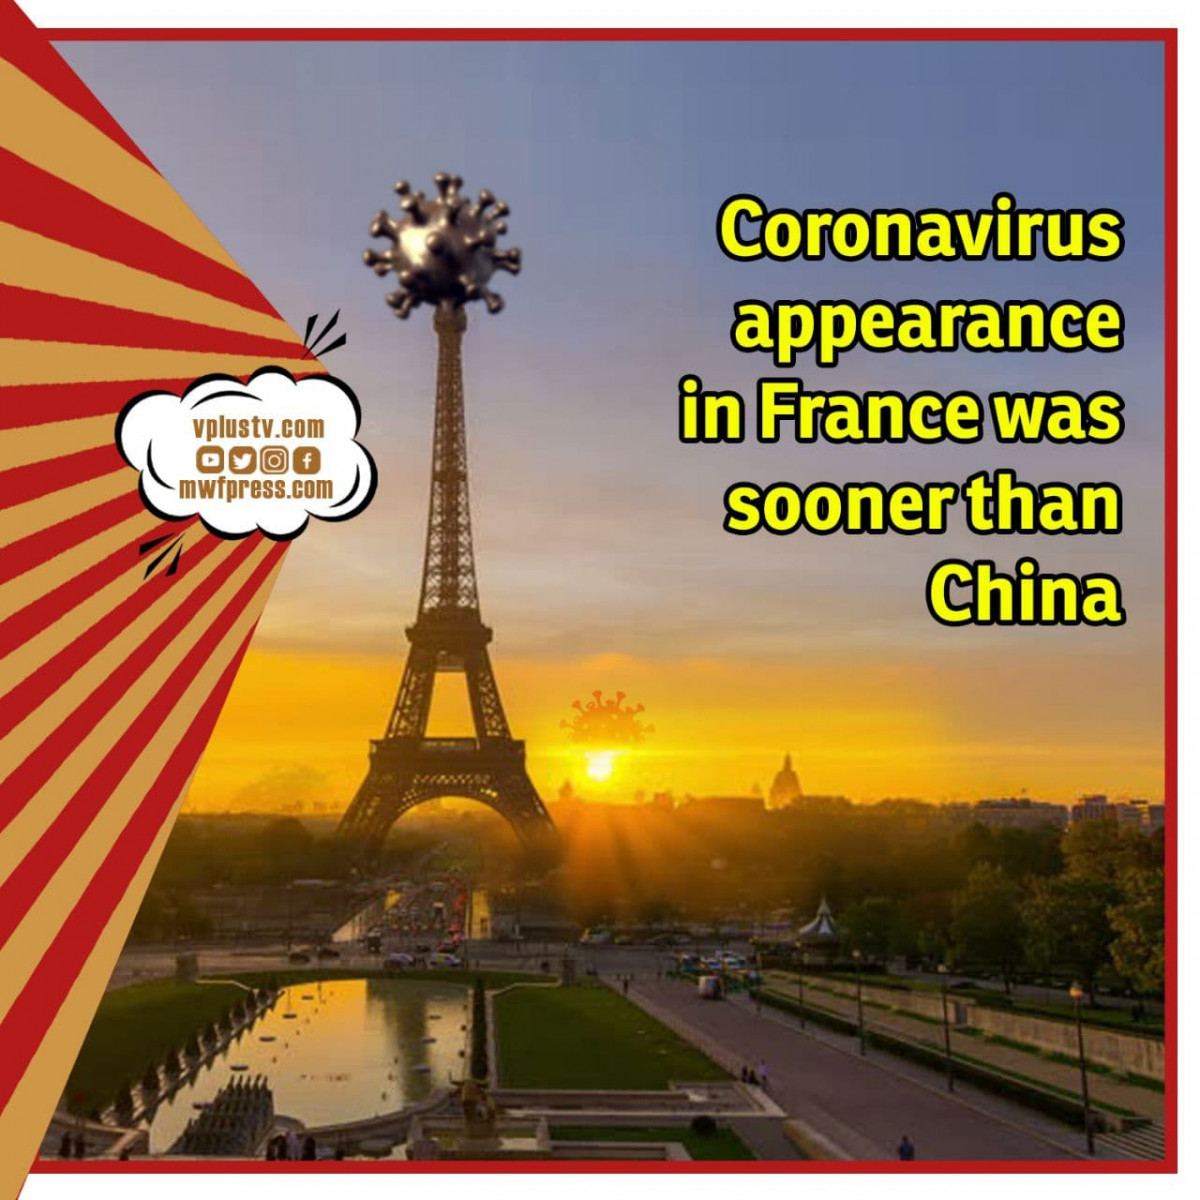 Coronavirus appearance in France was sooner than China